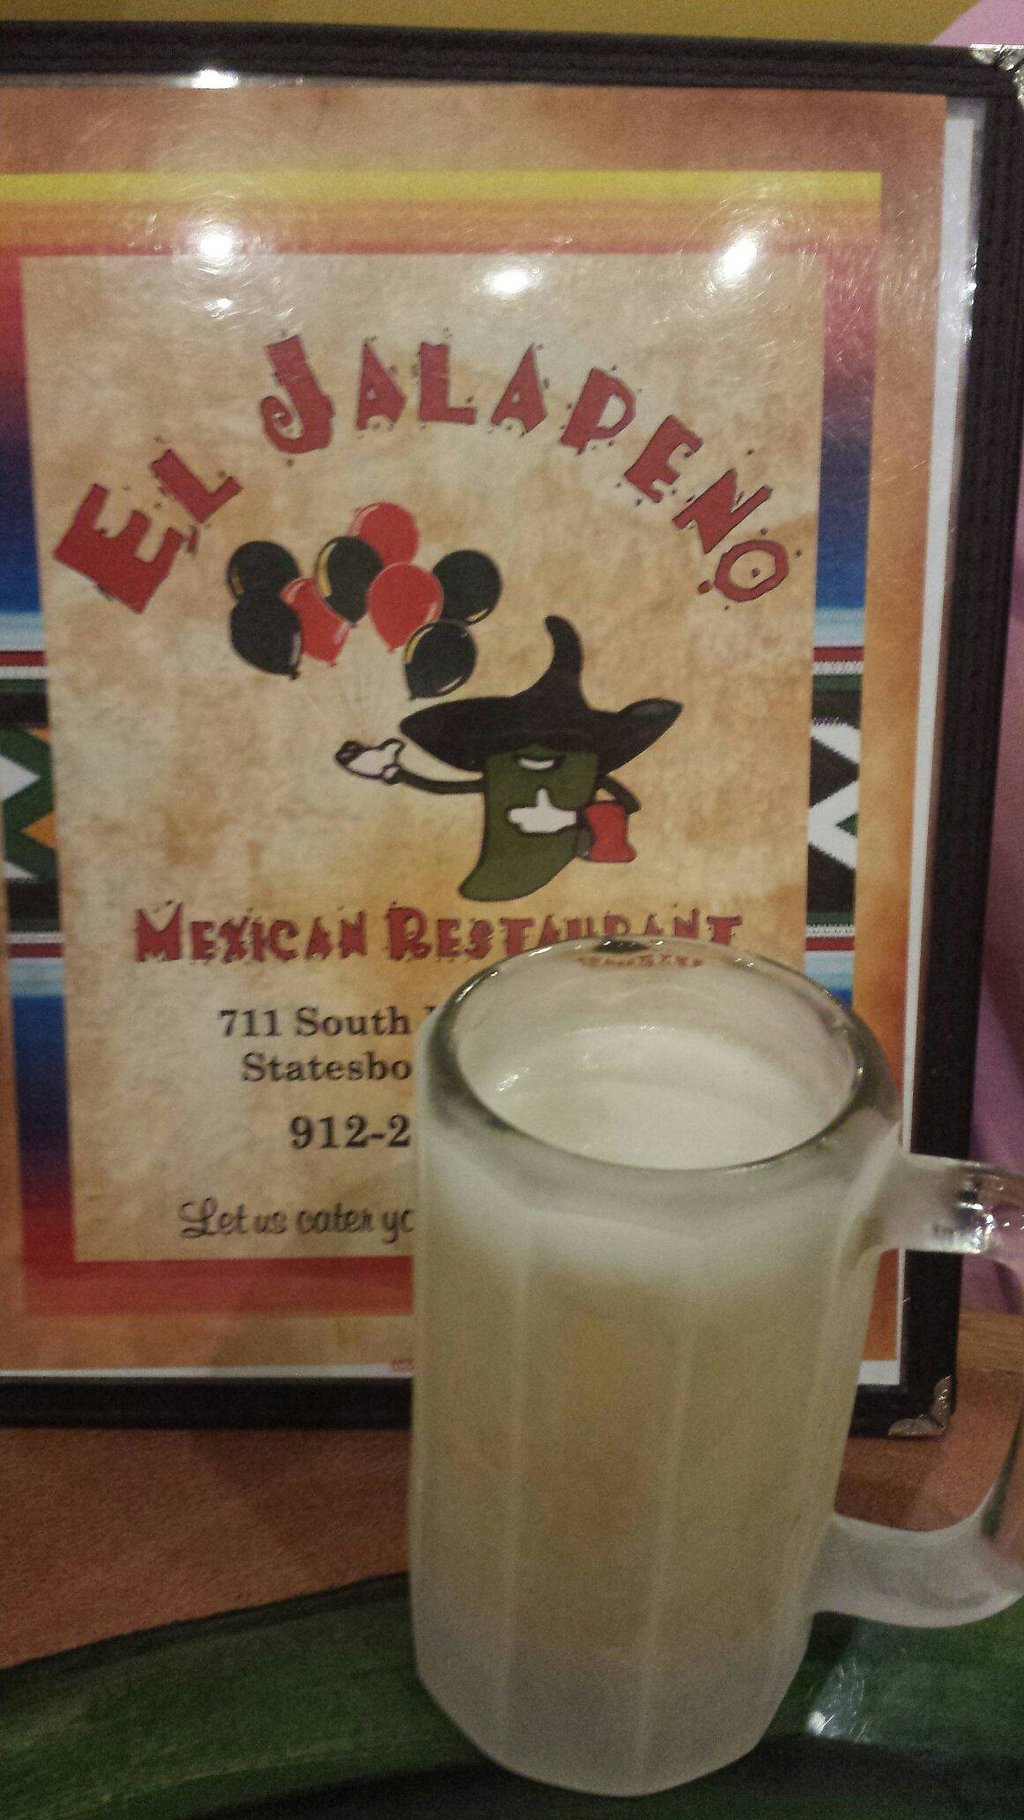 El Jalapeno Mexican Restaurant